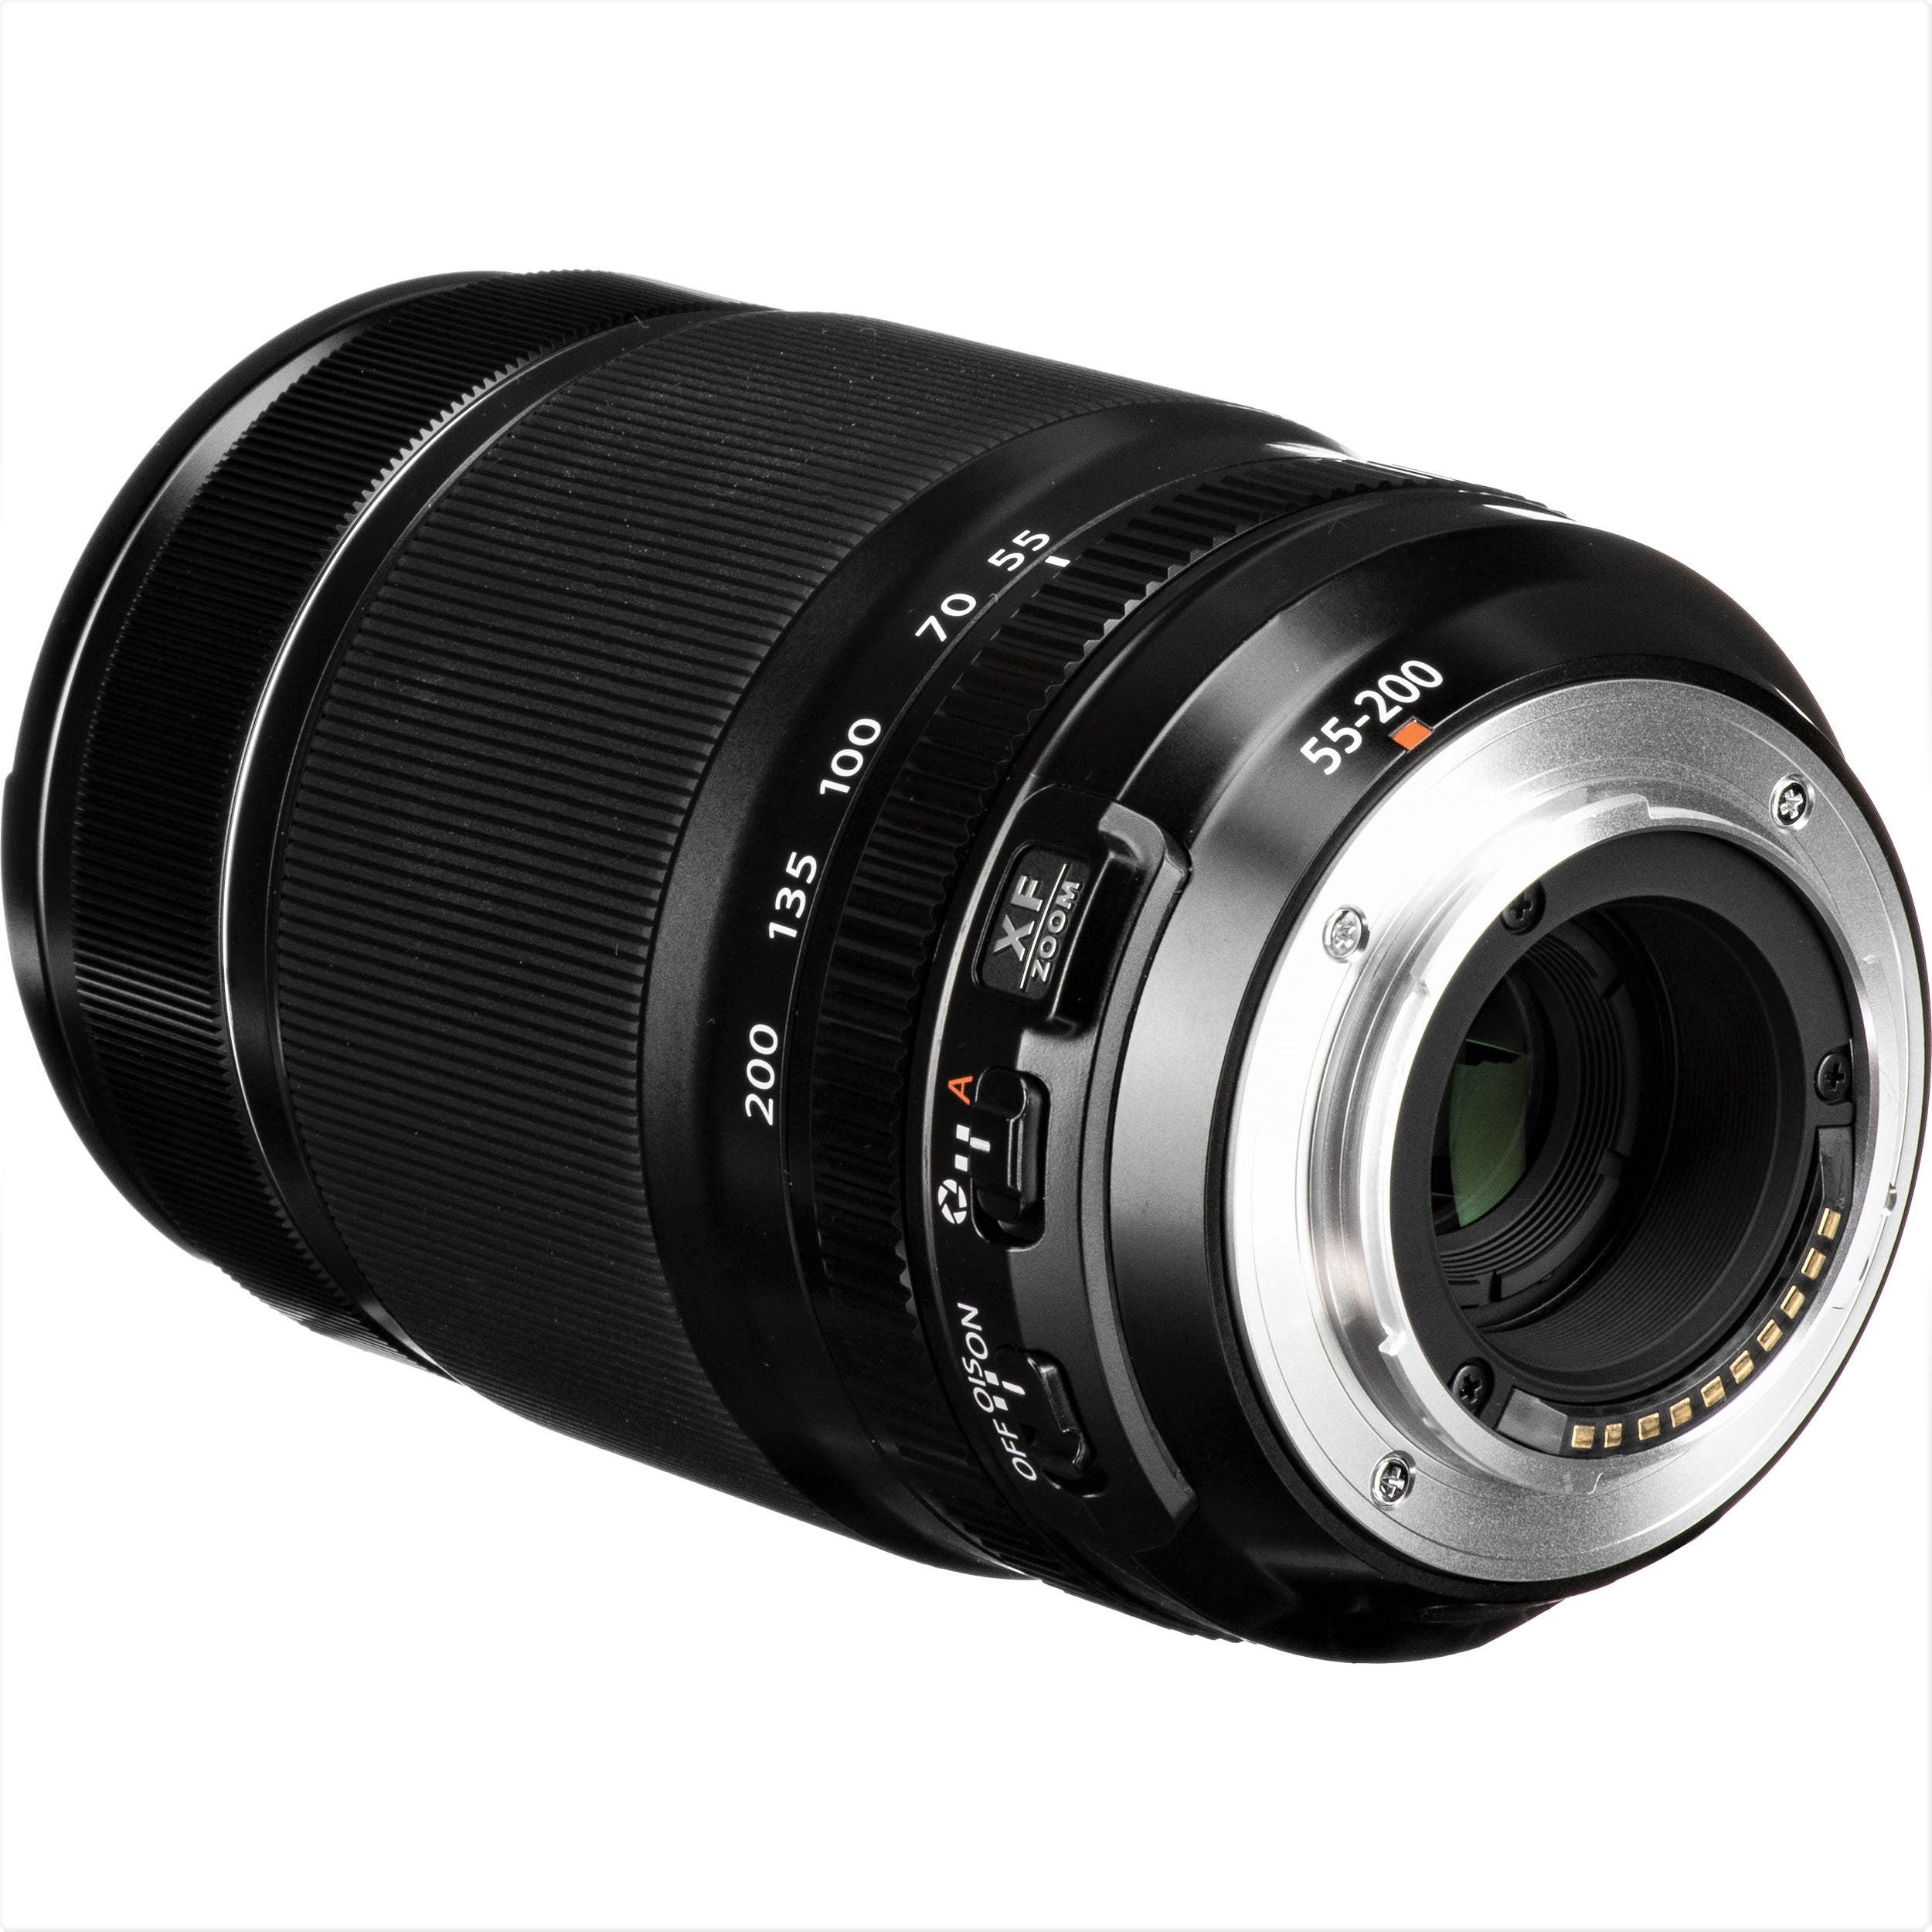 Fujifilm XF 55-200mm F3.5-4.8 R LM OIS Lens - Back Side View